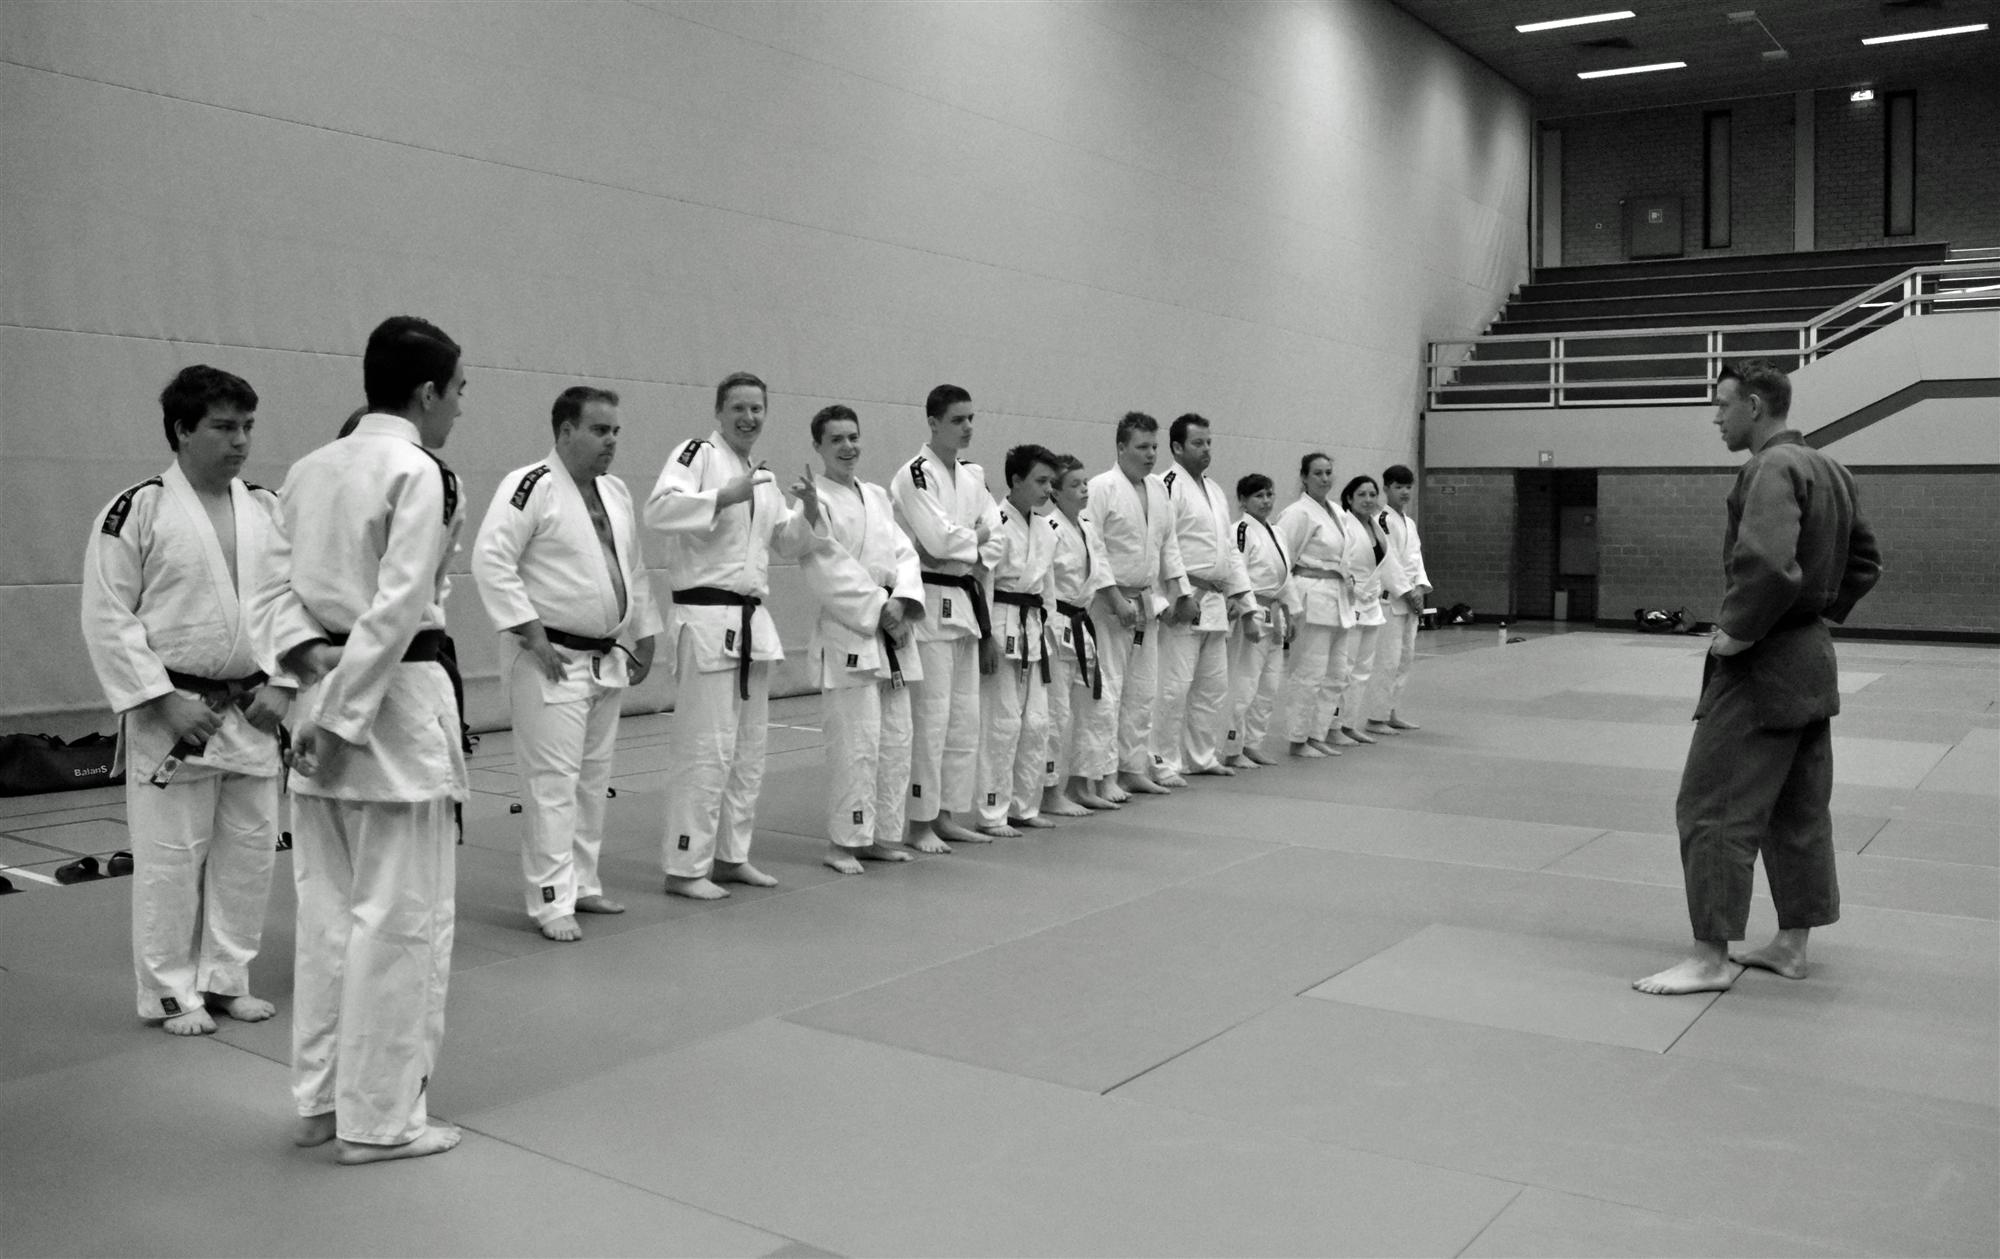 http://judoclubbrunssum.nl/iw-courses/b2/